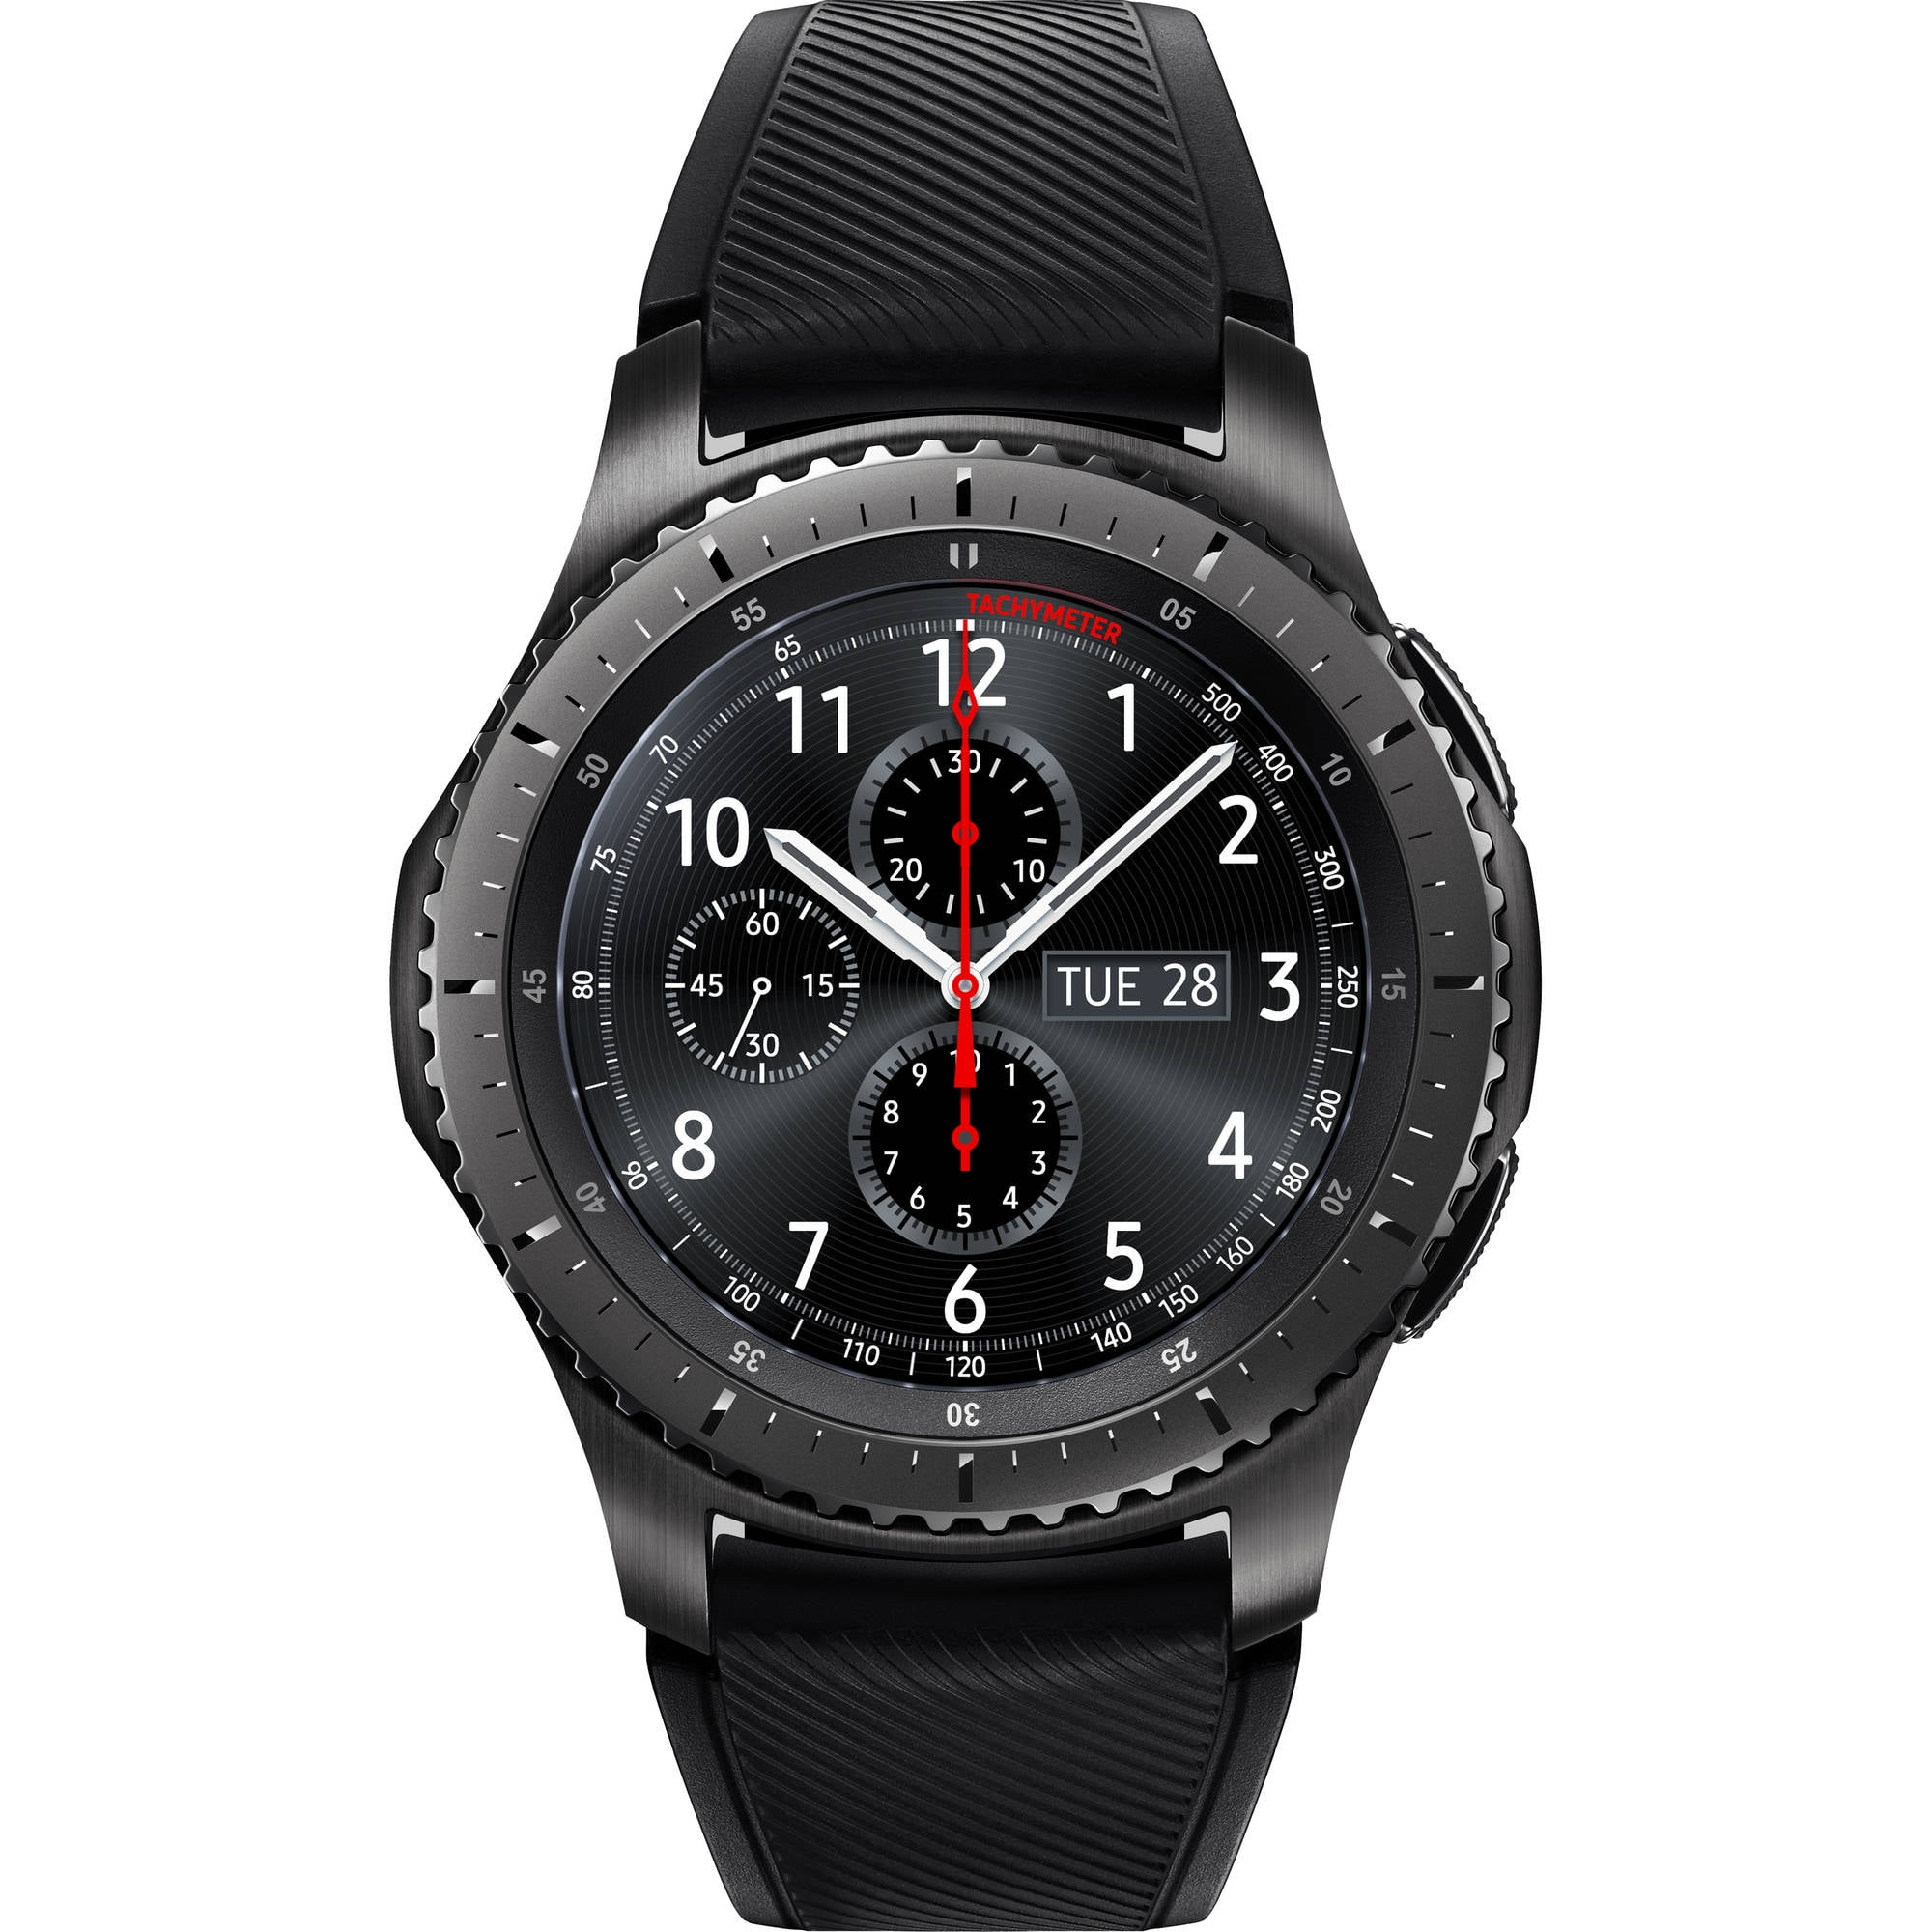 struik partitie lening SAMSUNG Gear S3 Frontier Smart Watch Black 46mm - SM-R760NDAAXAR -  Walmart.com